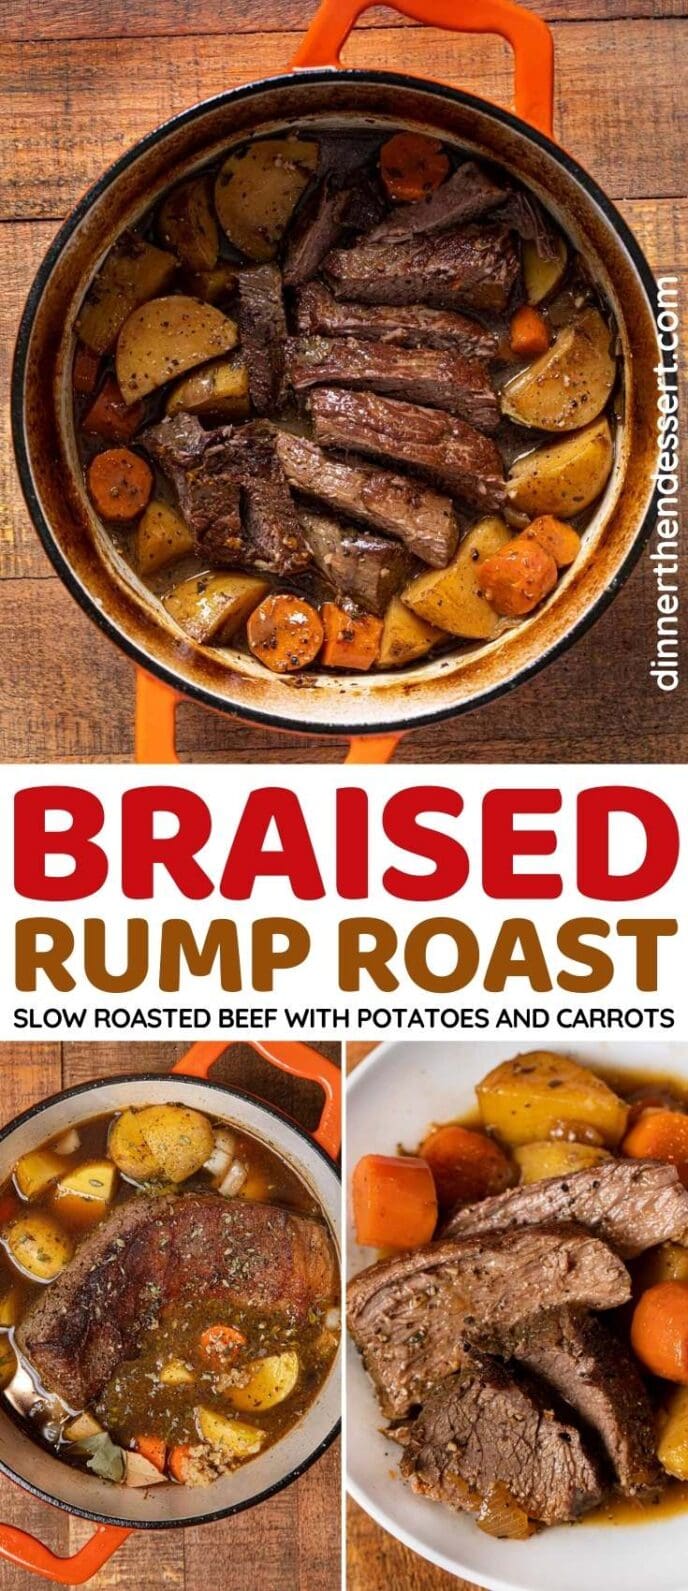 Easy Rump Roast Recipe (Makes Great Leftovers!) - Dinner, then Dessert